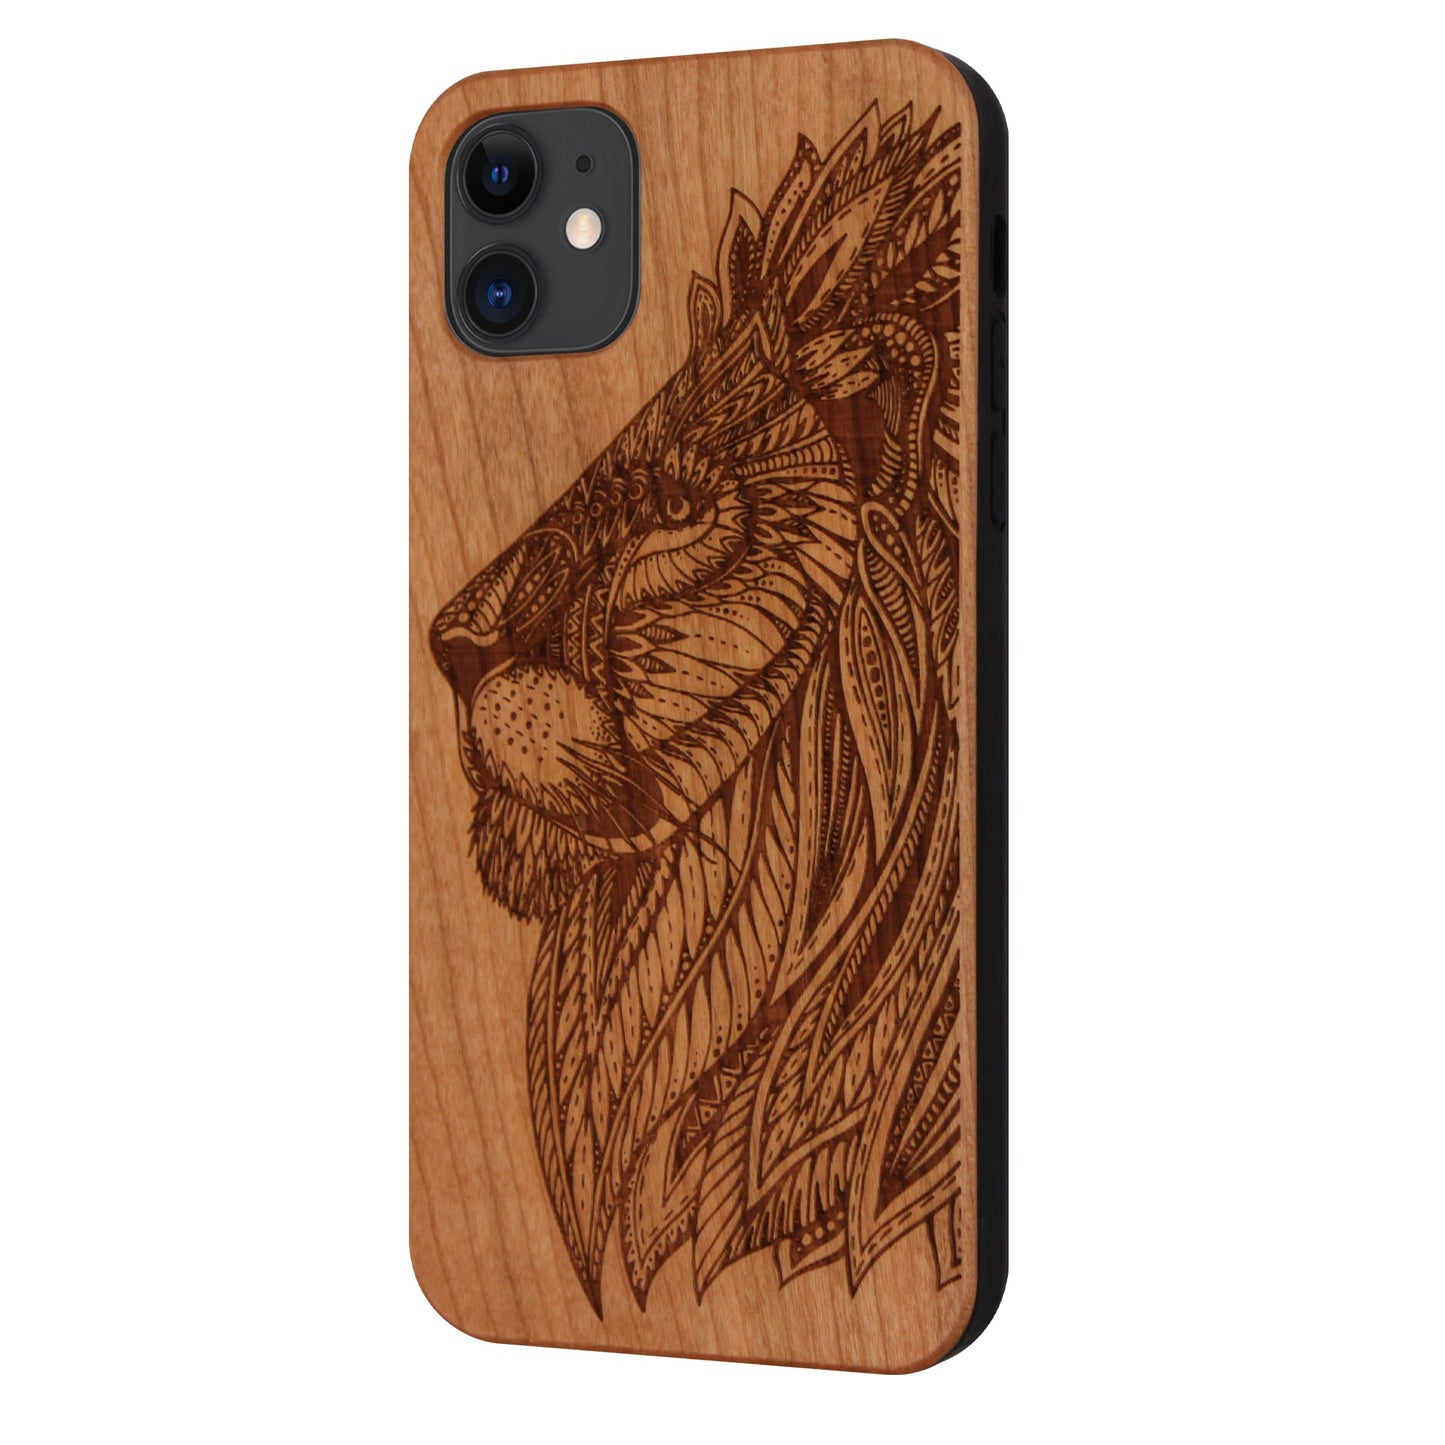 Cherry wood lion Eden case for iPhone 11 